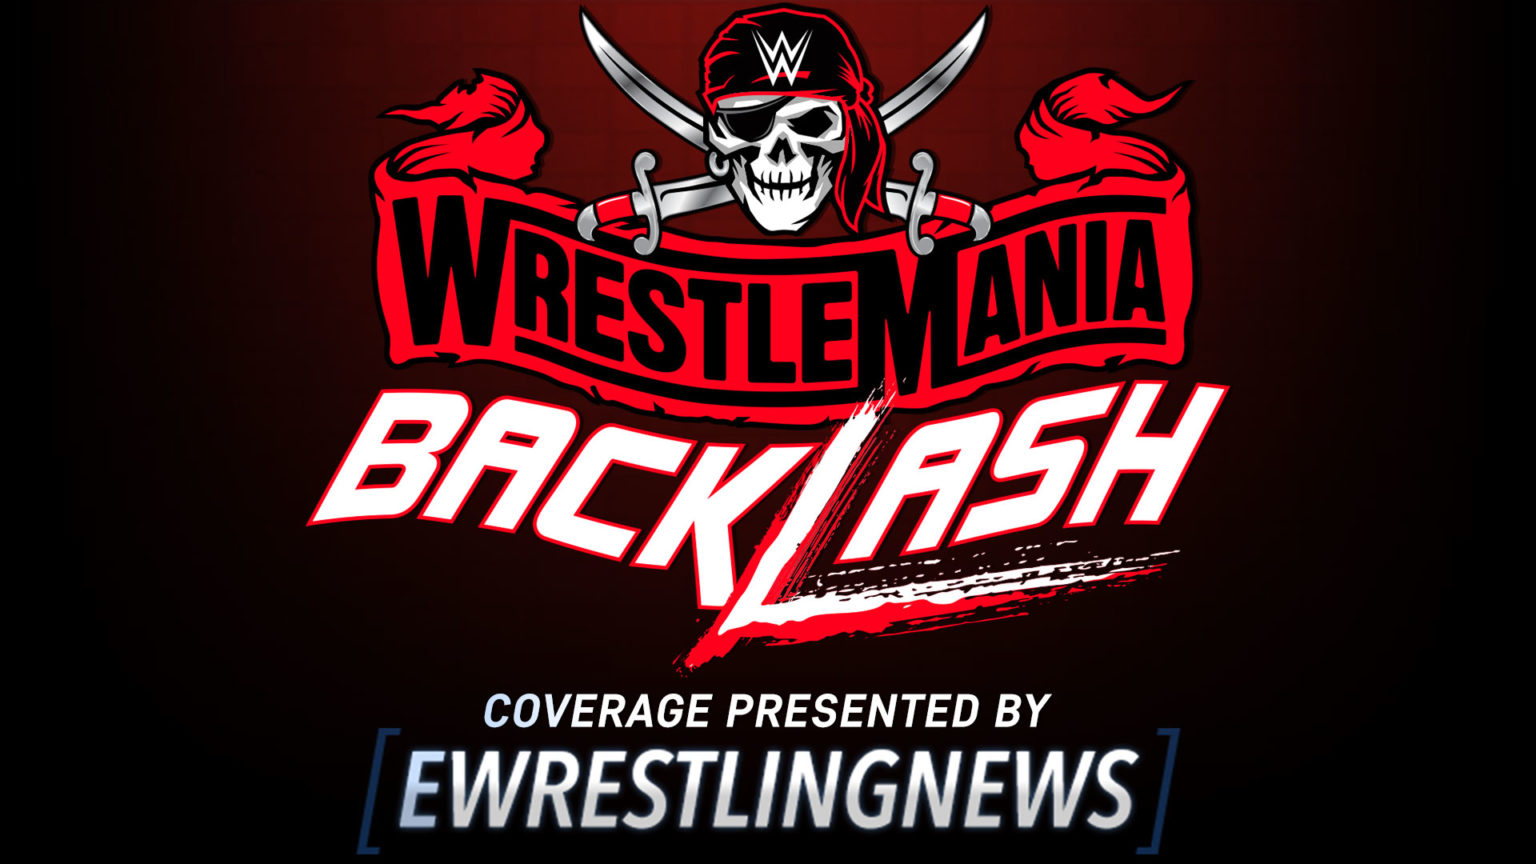 Watch The Wwe Wrestlemania Backlash Kickoff Show Ewrestlingnews Com